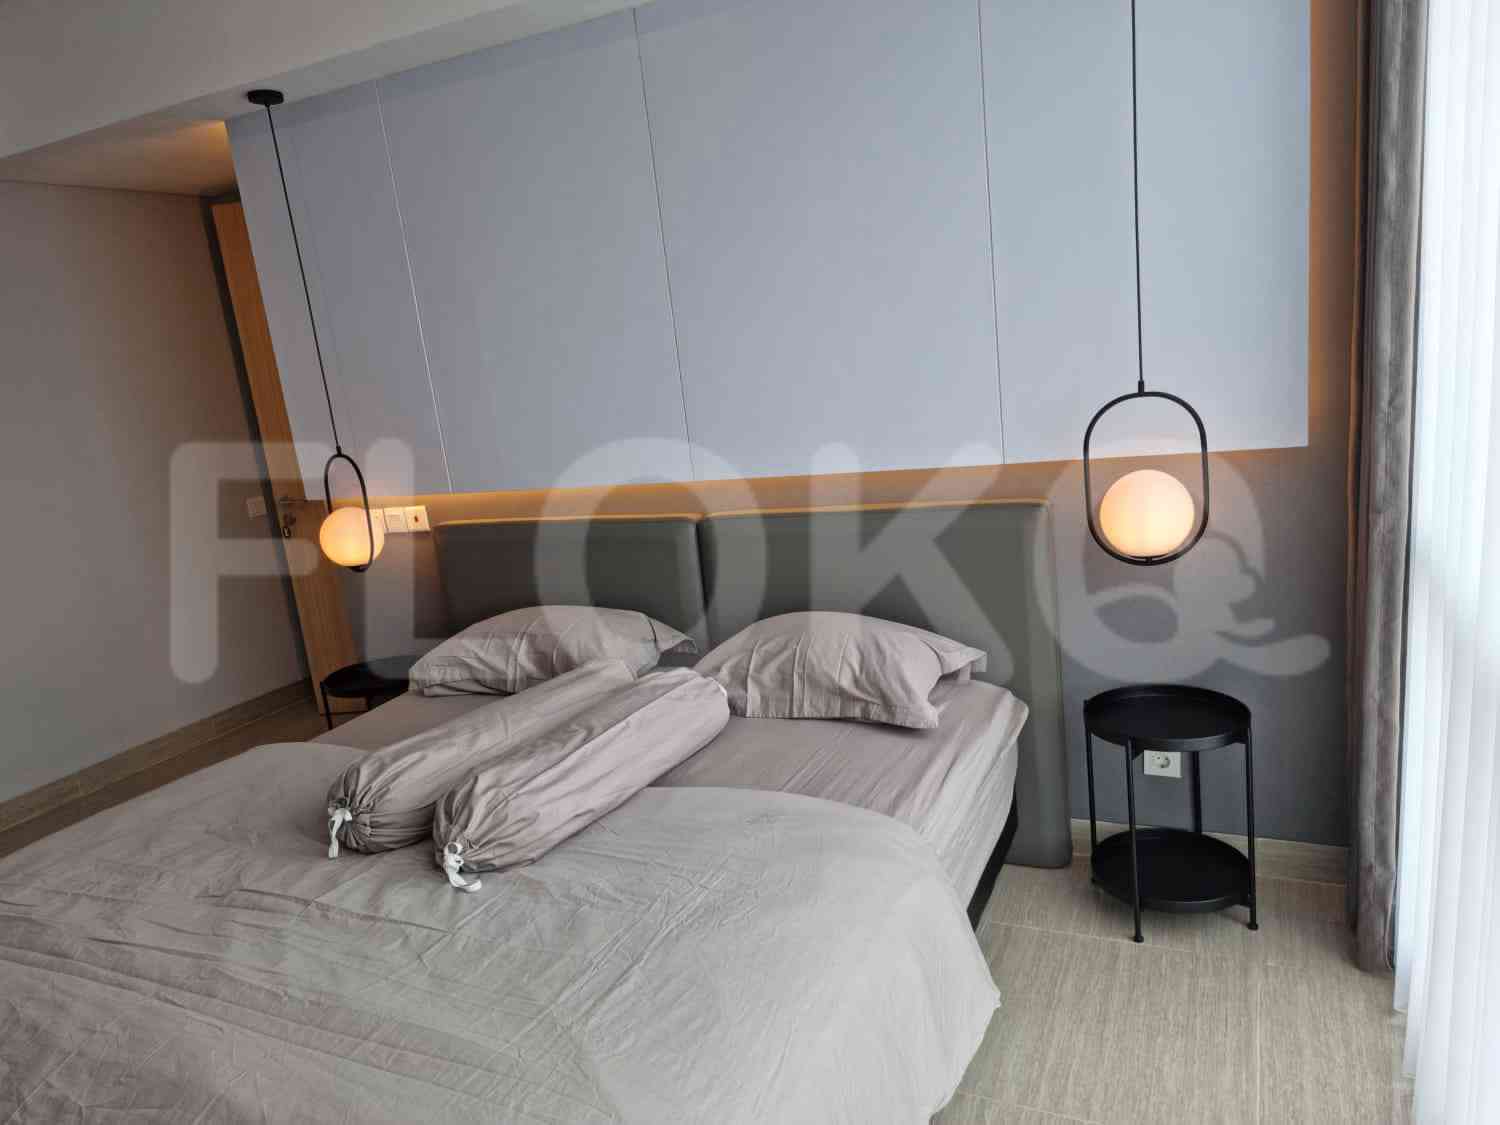 2 Bedroom on 22nd Floor for Rent in Millenium Village Apartment - fkad74 11